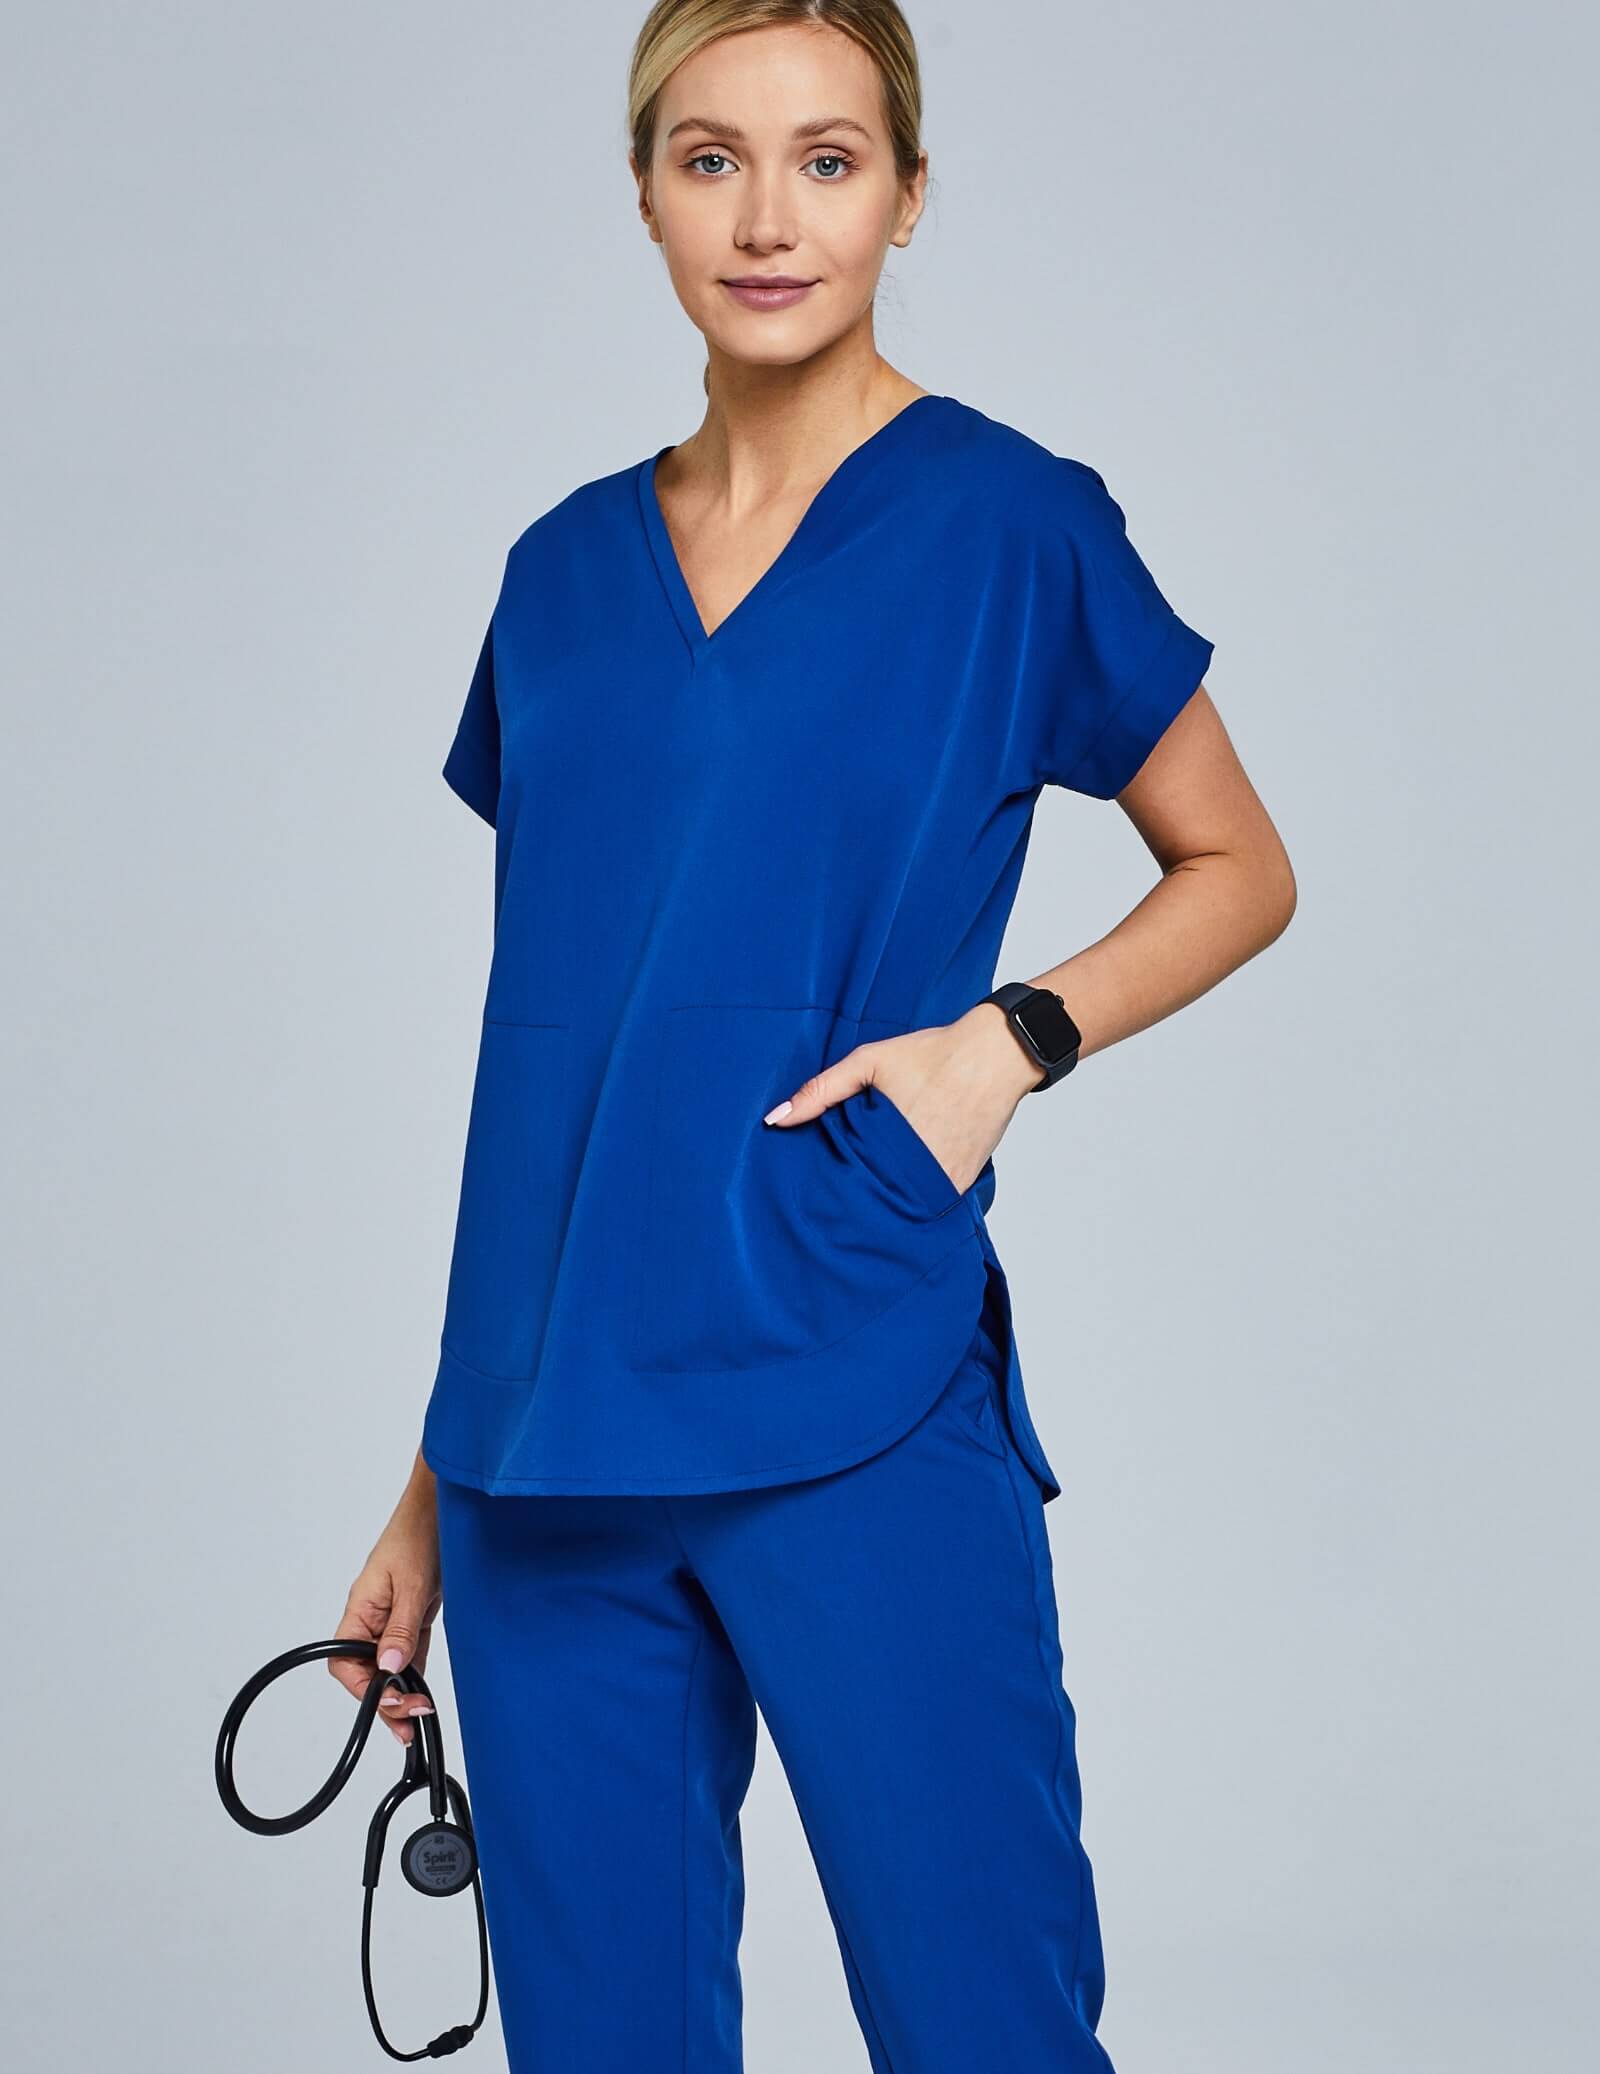 Bluza Medyczna Kendall - COBALT BLUE